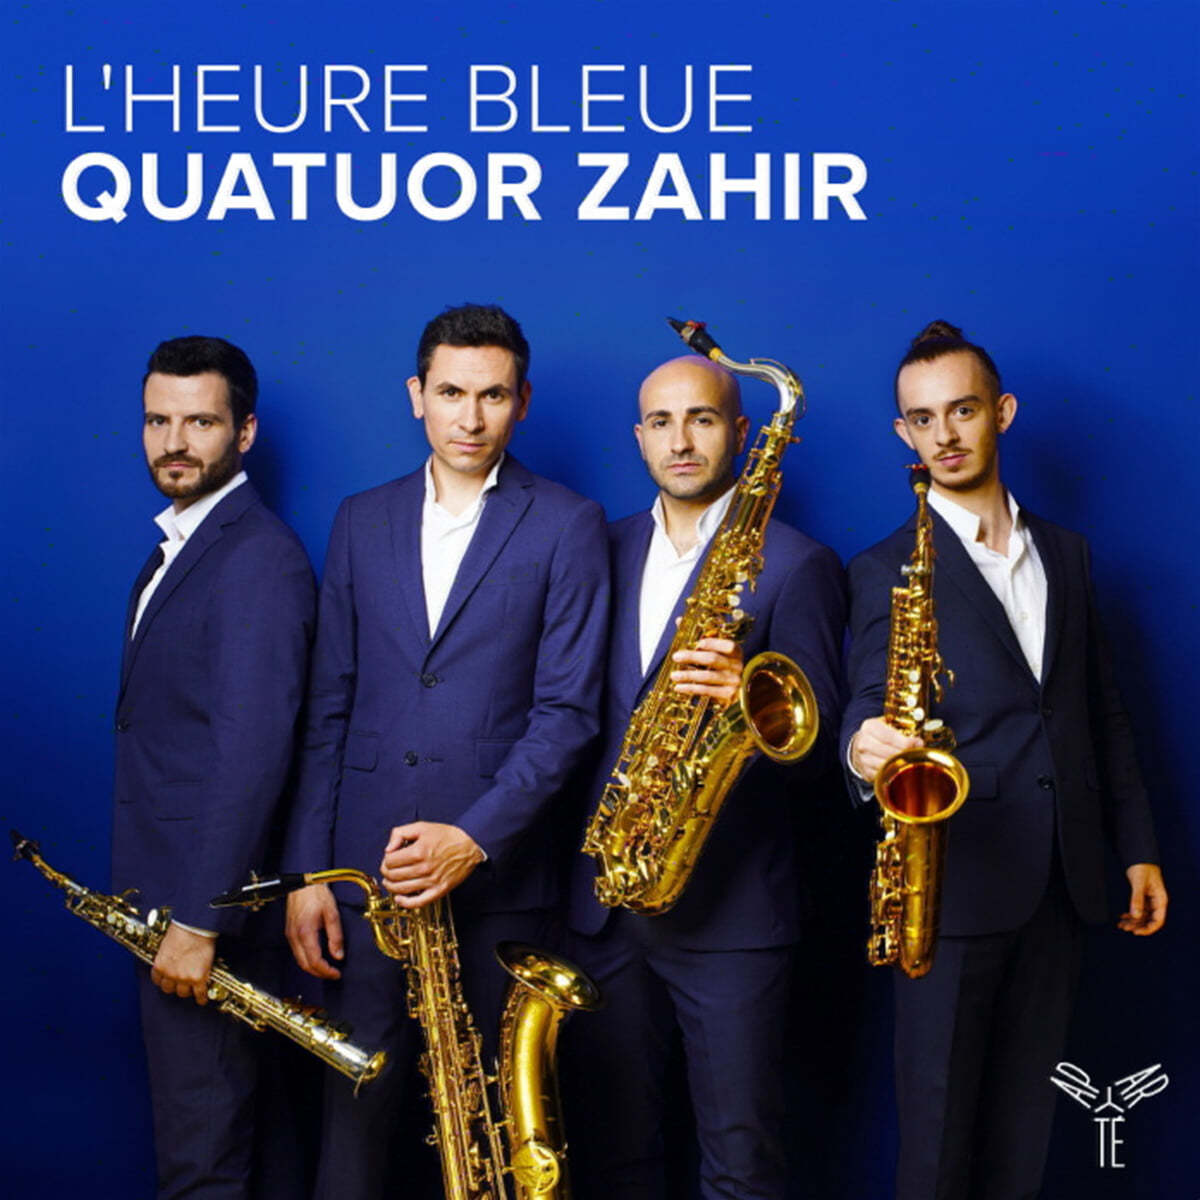 Quatuor Zahir 자히르 색소폰 사중주단 연주집 (L'Heure Bleue)